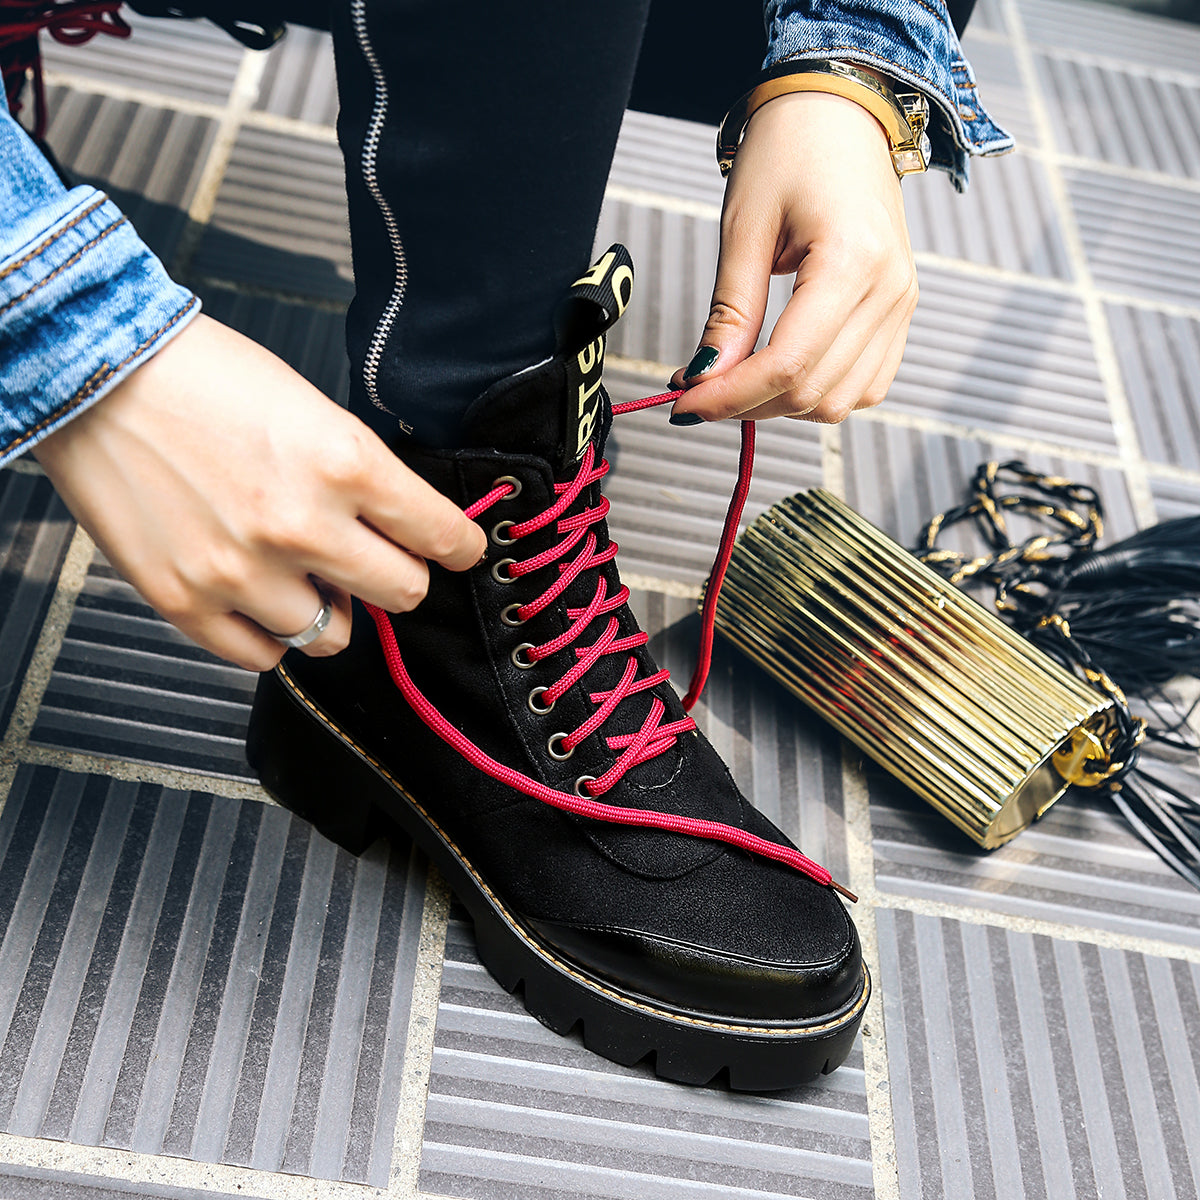 Bigsizeheels Round toe color strap Martin boots - Black freeshipping - bigsizeheel®-size5-size15 -All Plus Sizes Available!